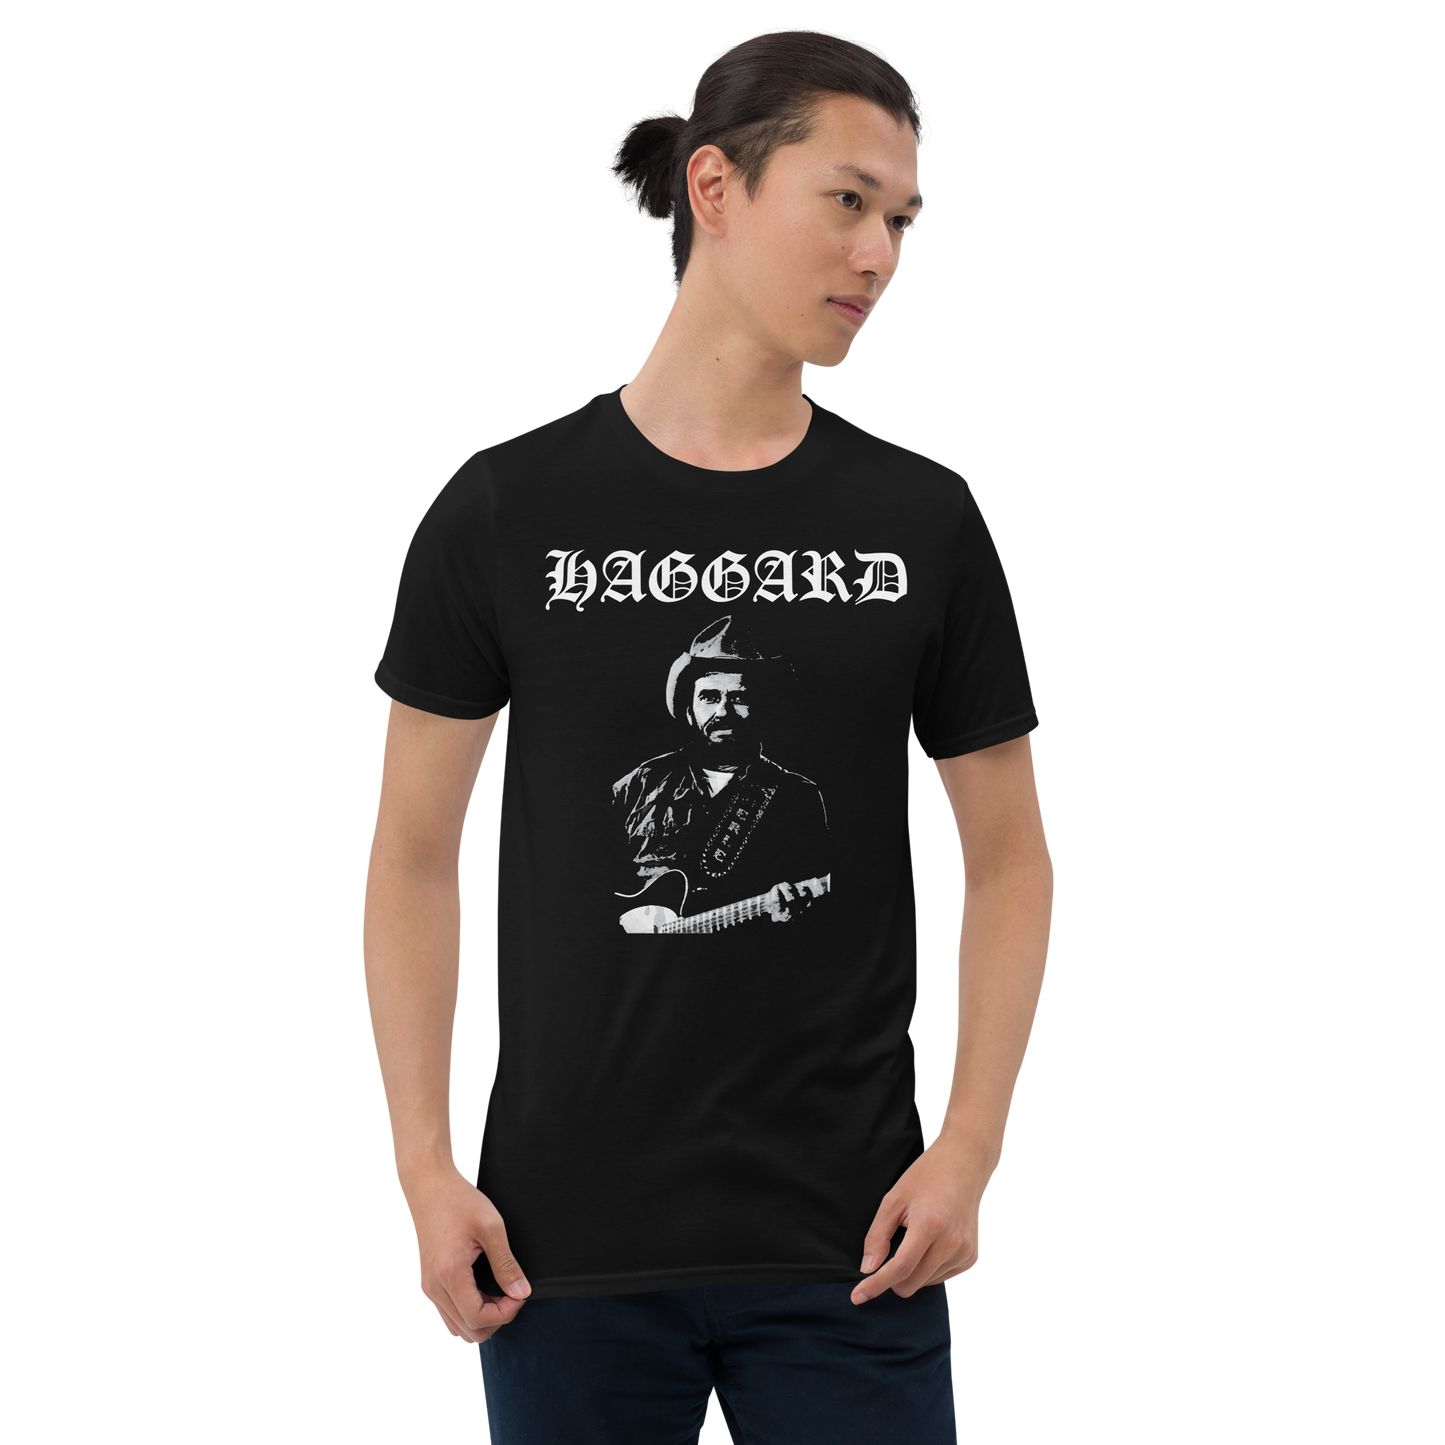 Haggard T-Shirt